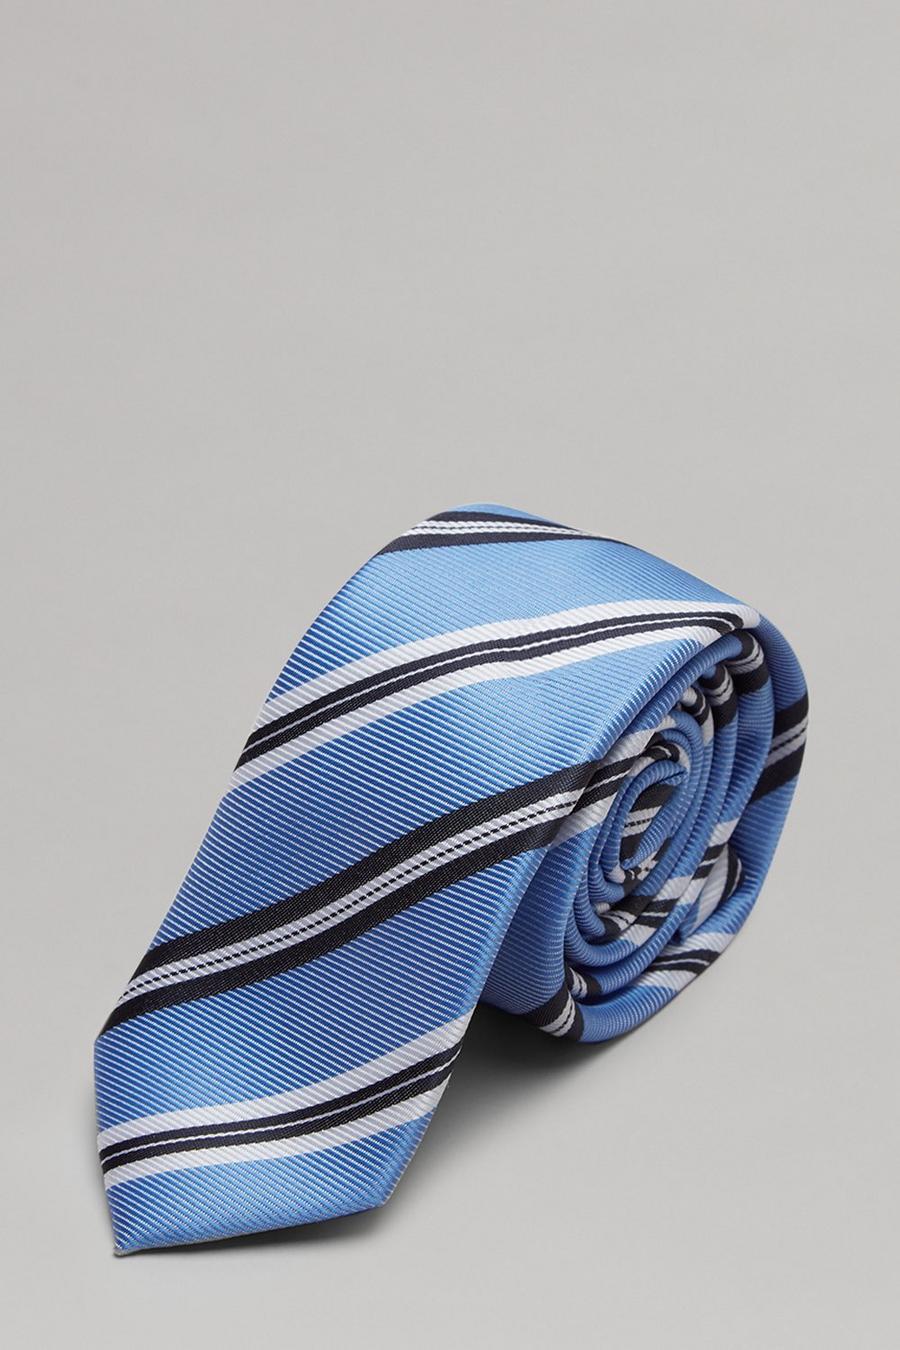 Blue And Navy Grain Stripe Tie